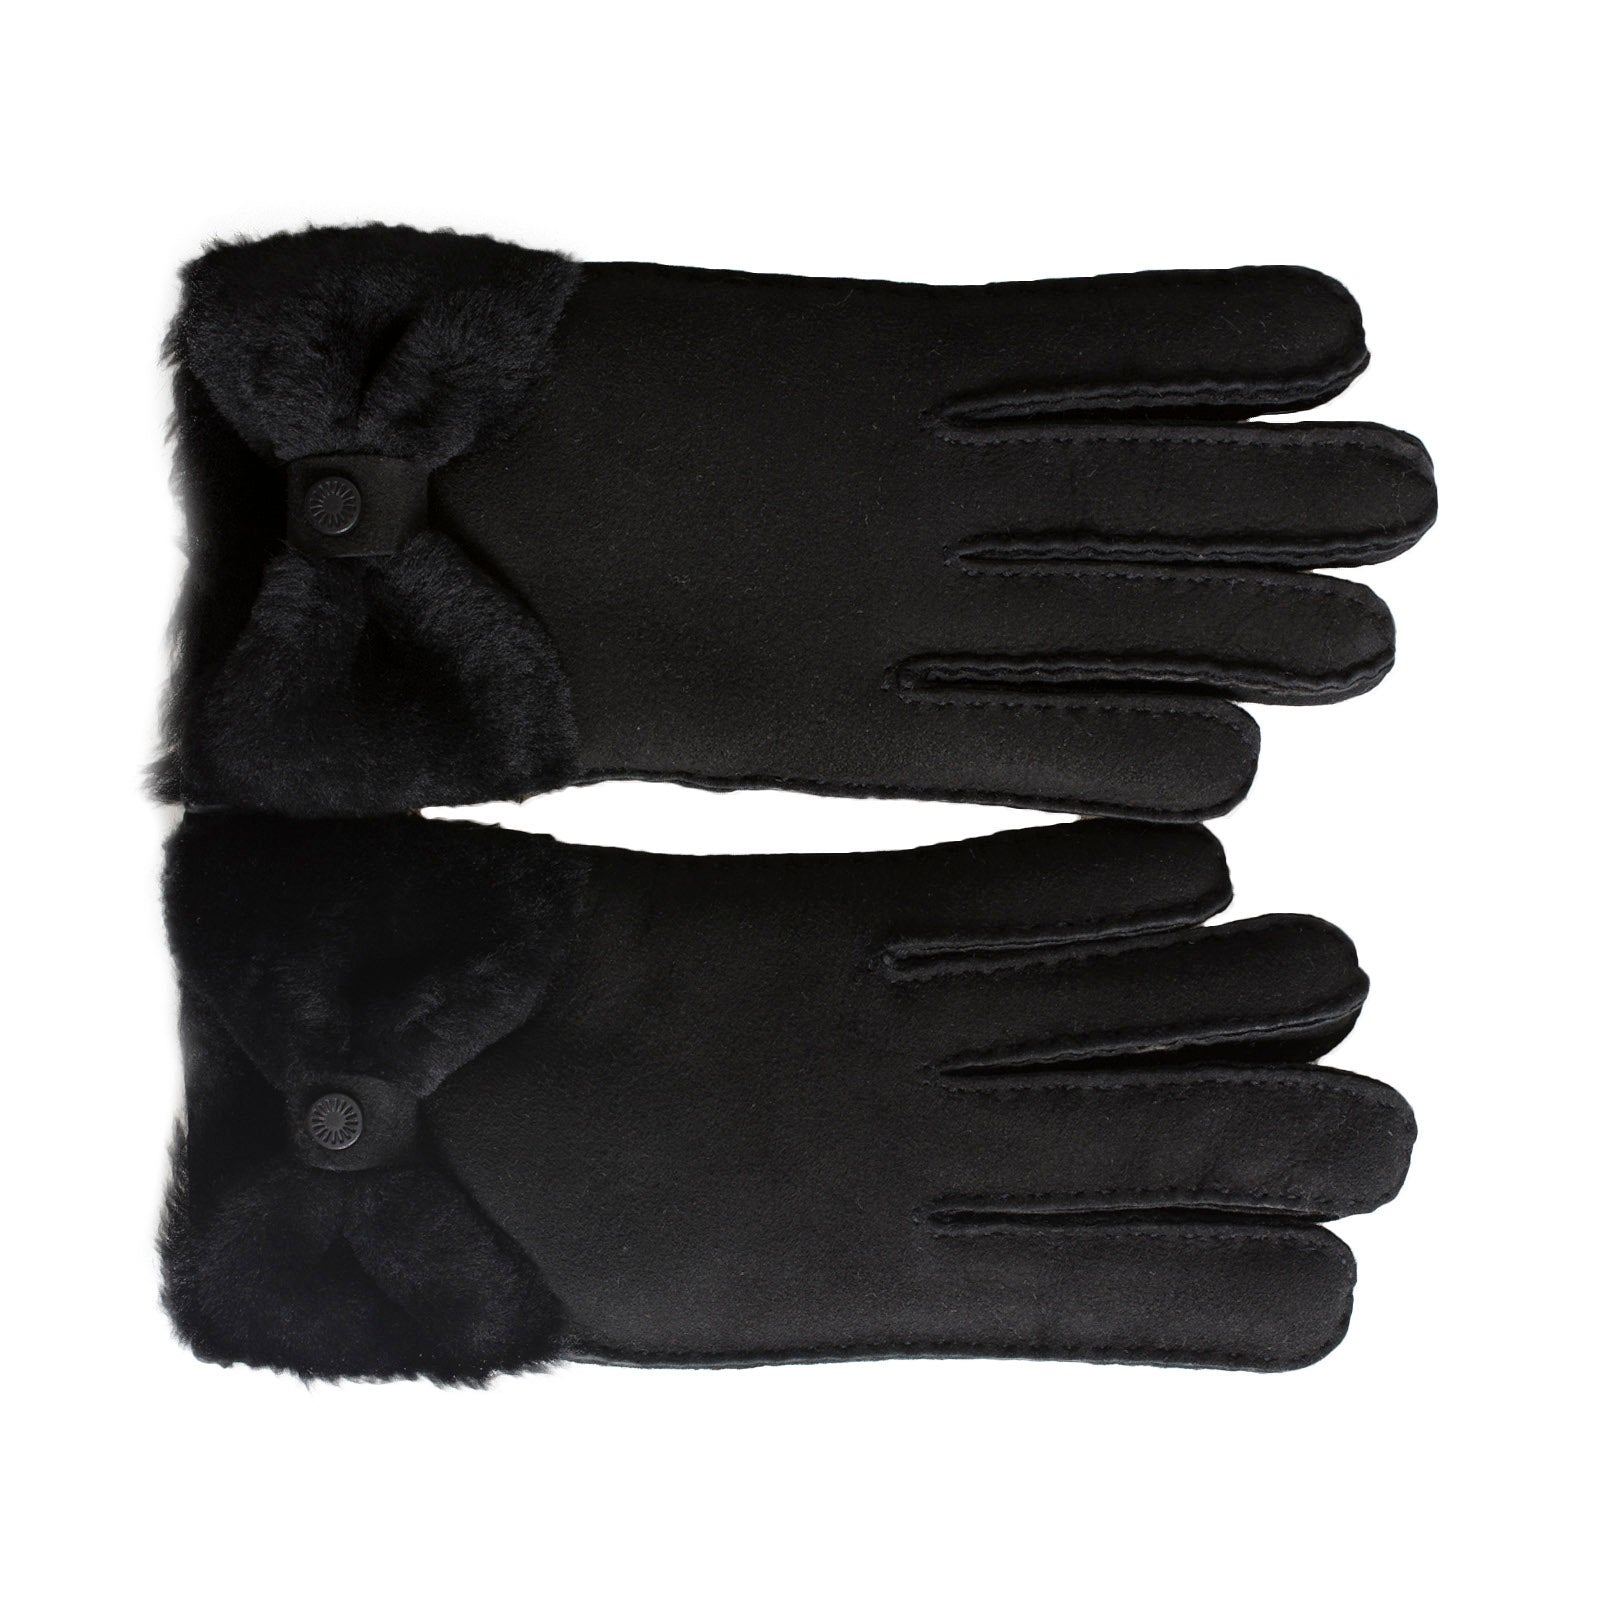 uggs black gloves